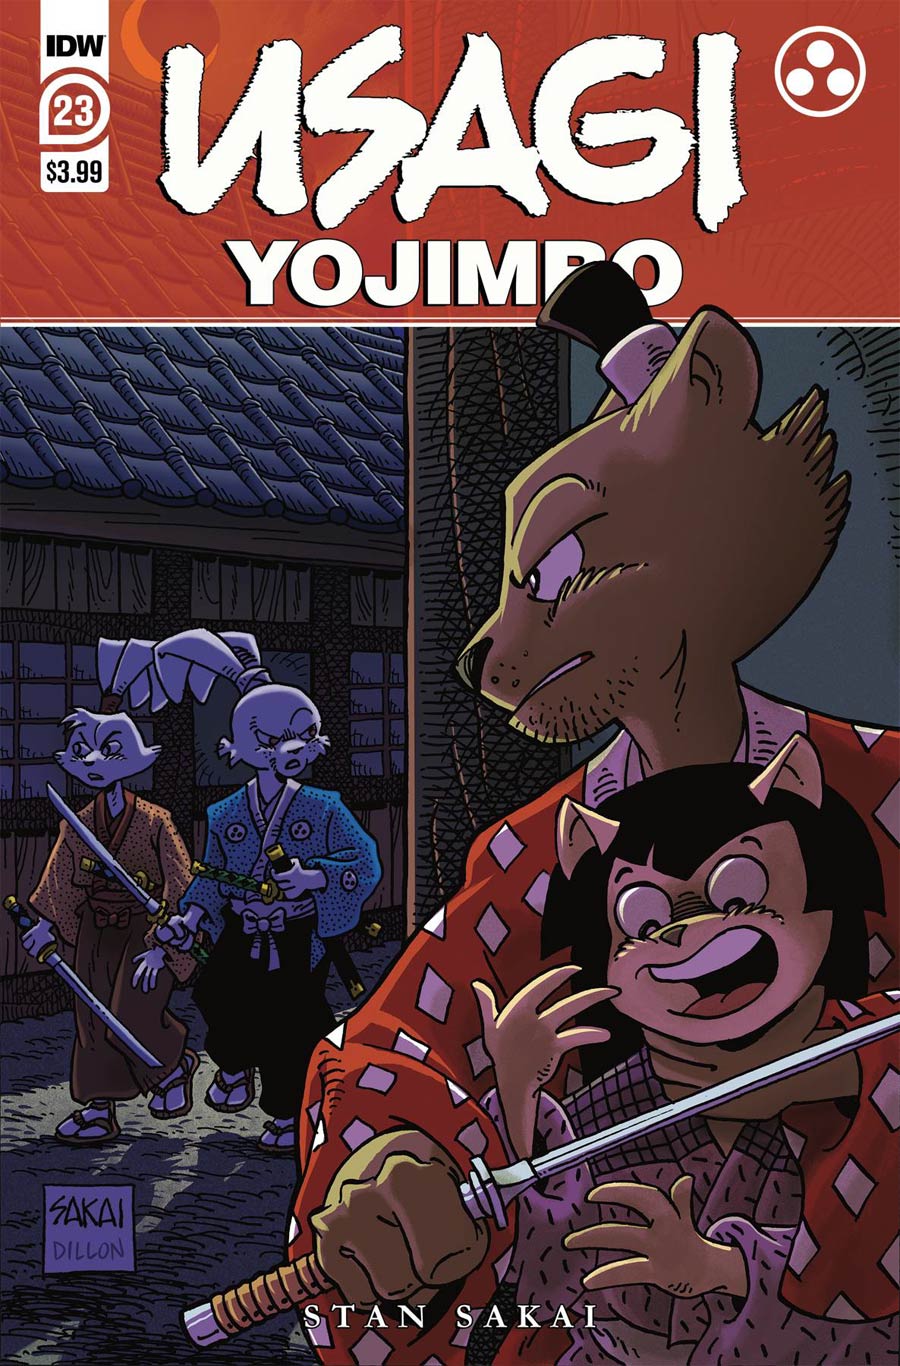 Usagi Yojimbo Vol 4 #23 Cover A Regular Stan Sakai Cover